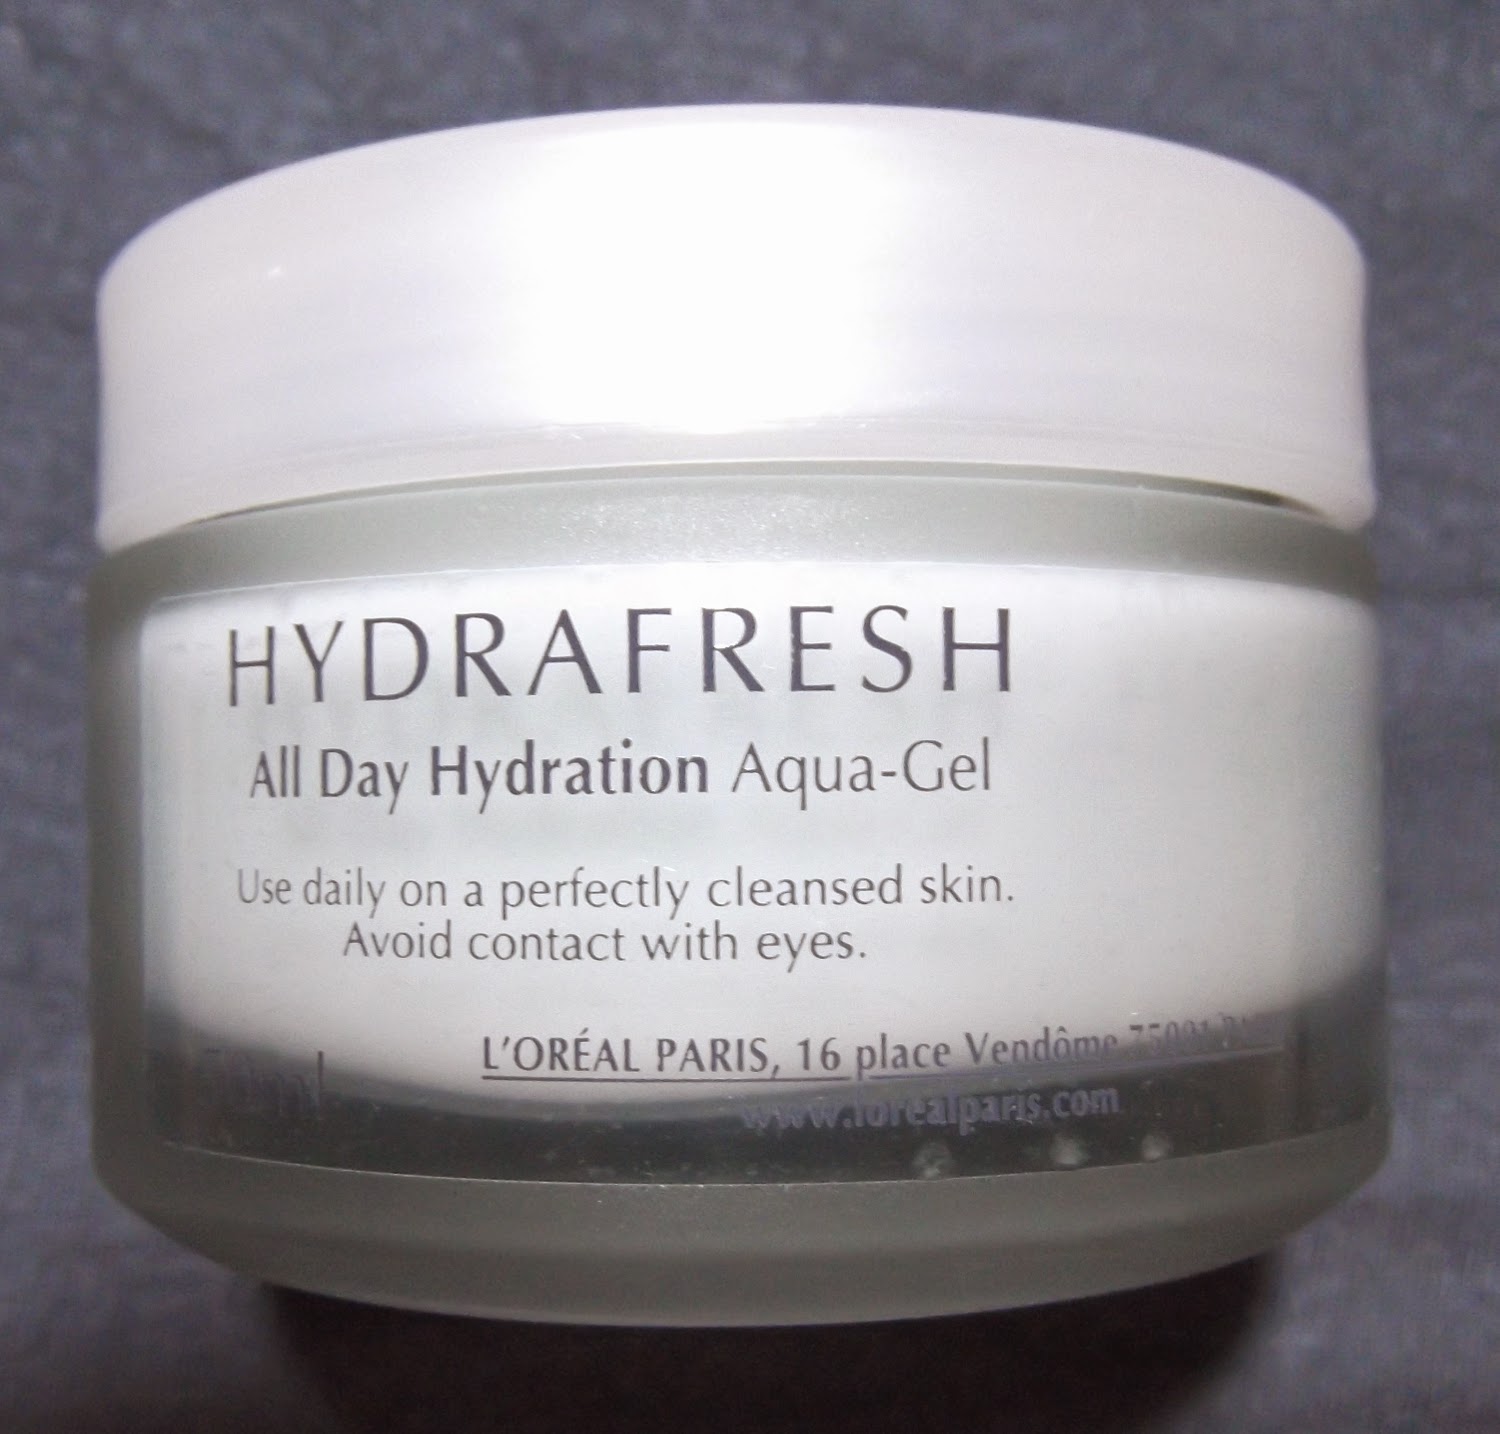 L'Oreal Paris  Hydrafresh - Hydratant peau mixte a grasse SPF15